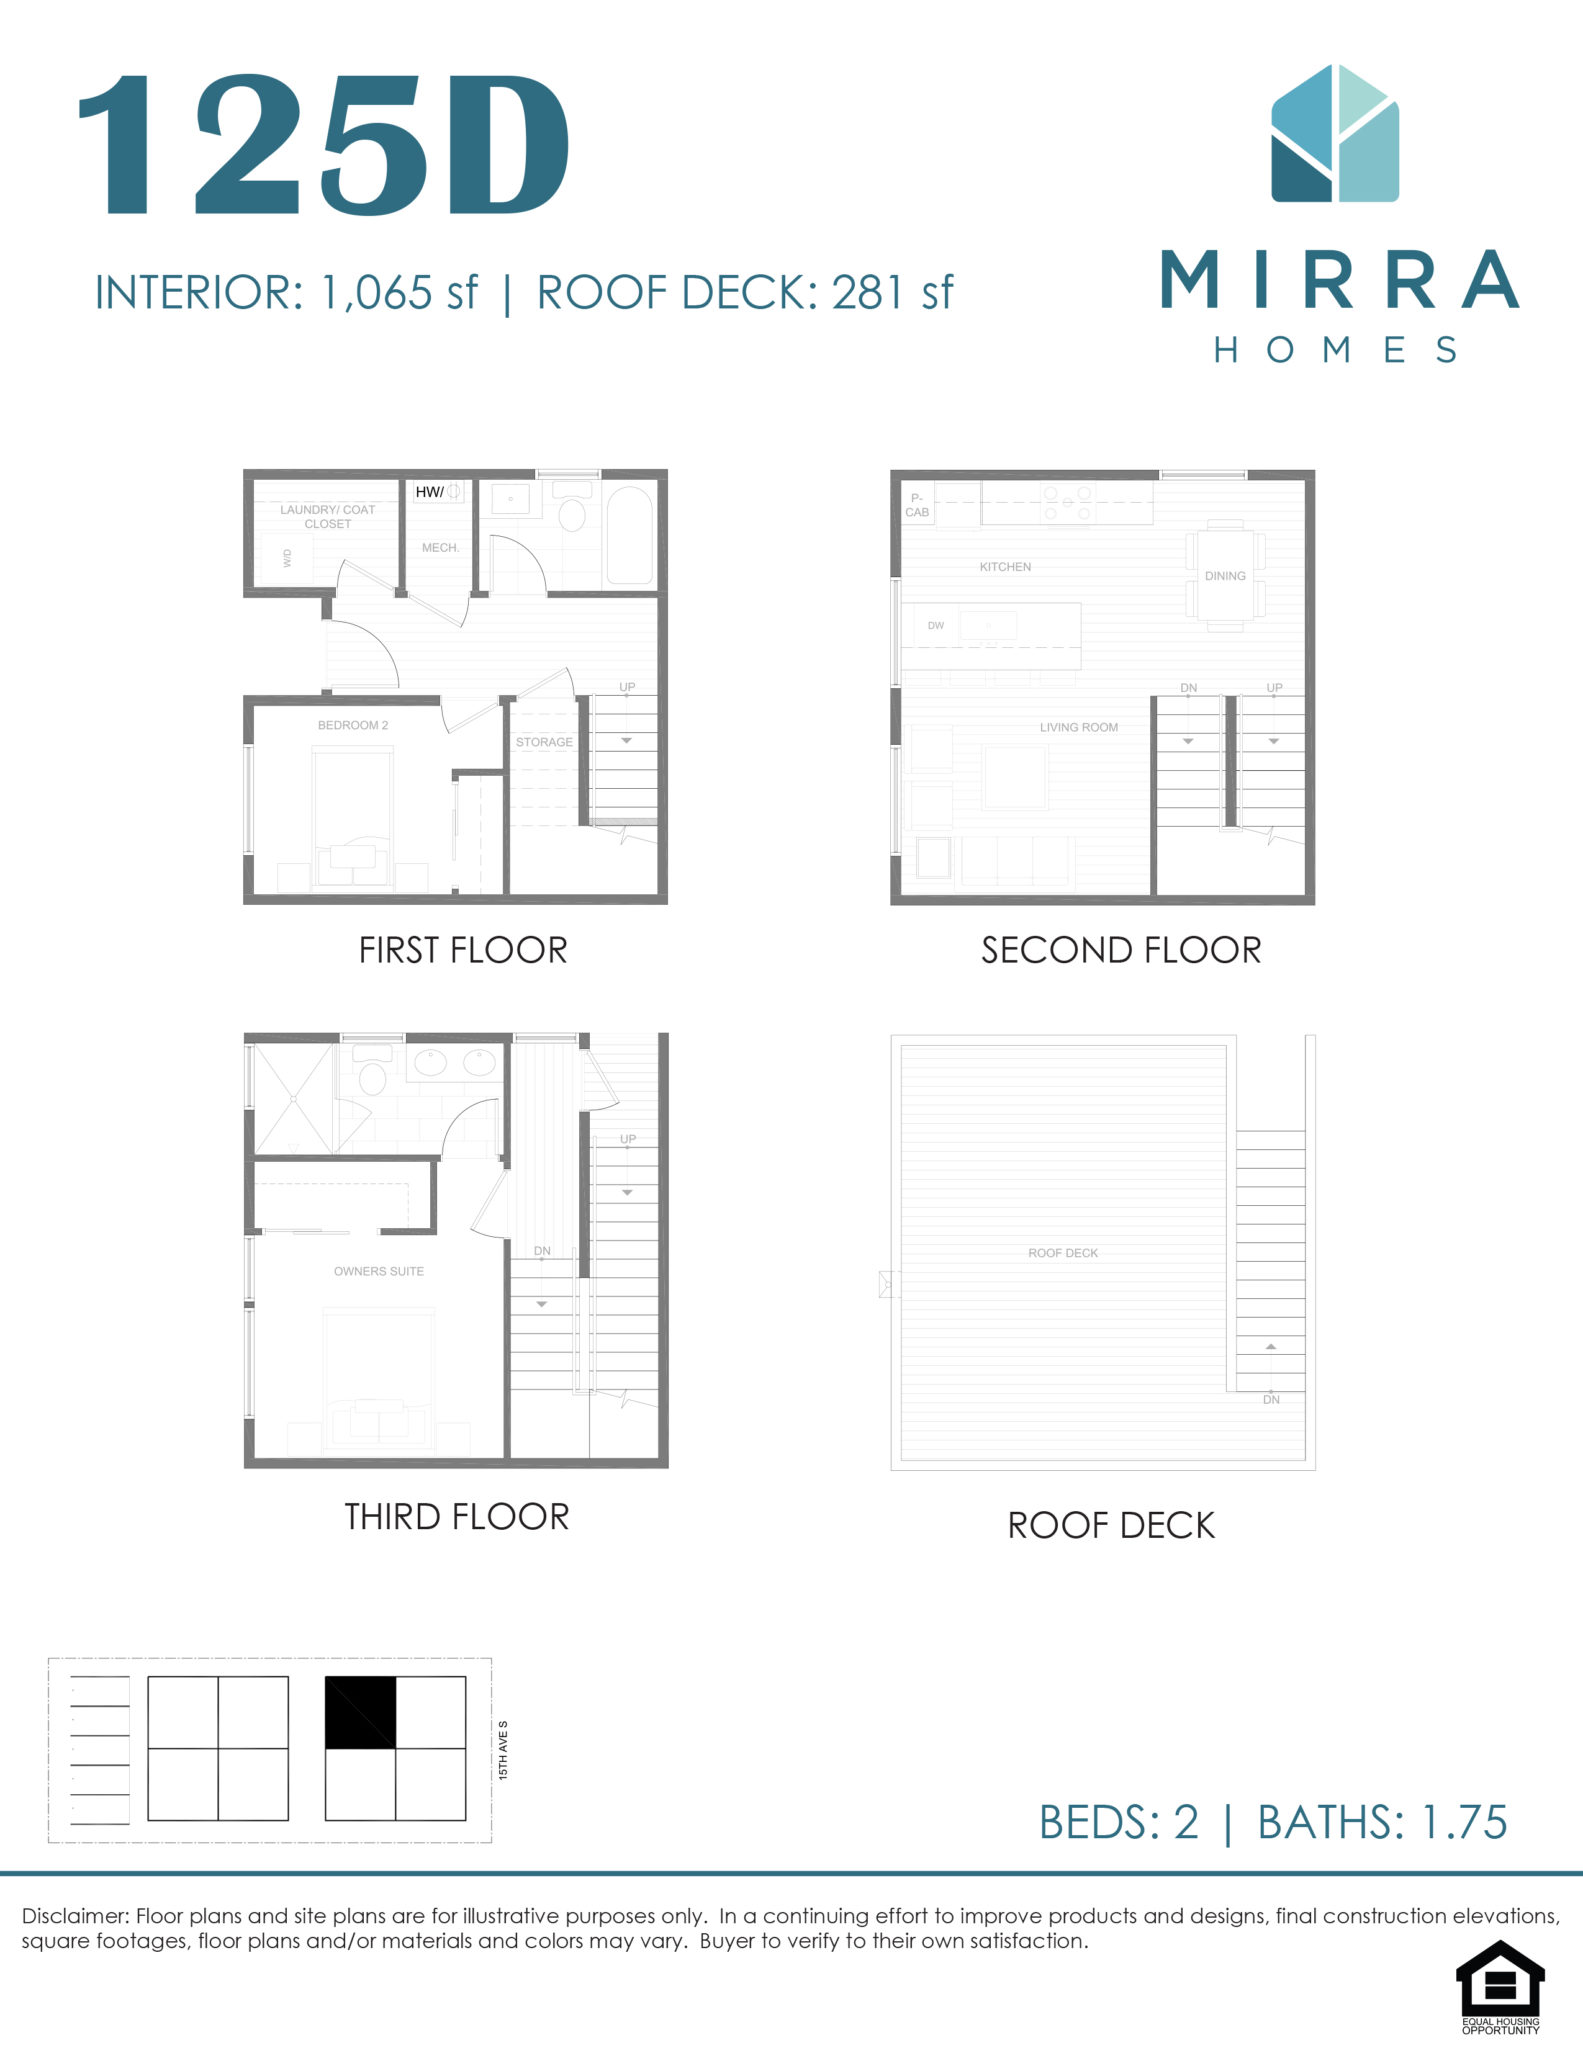 Mirra Homes, LLC